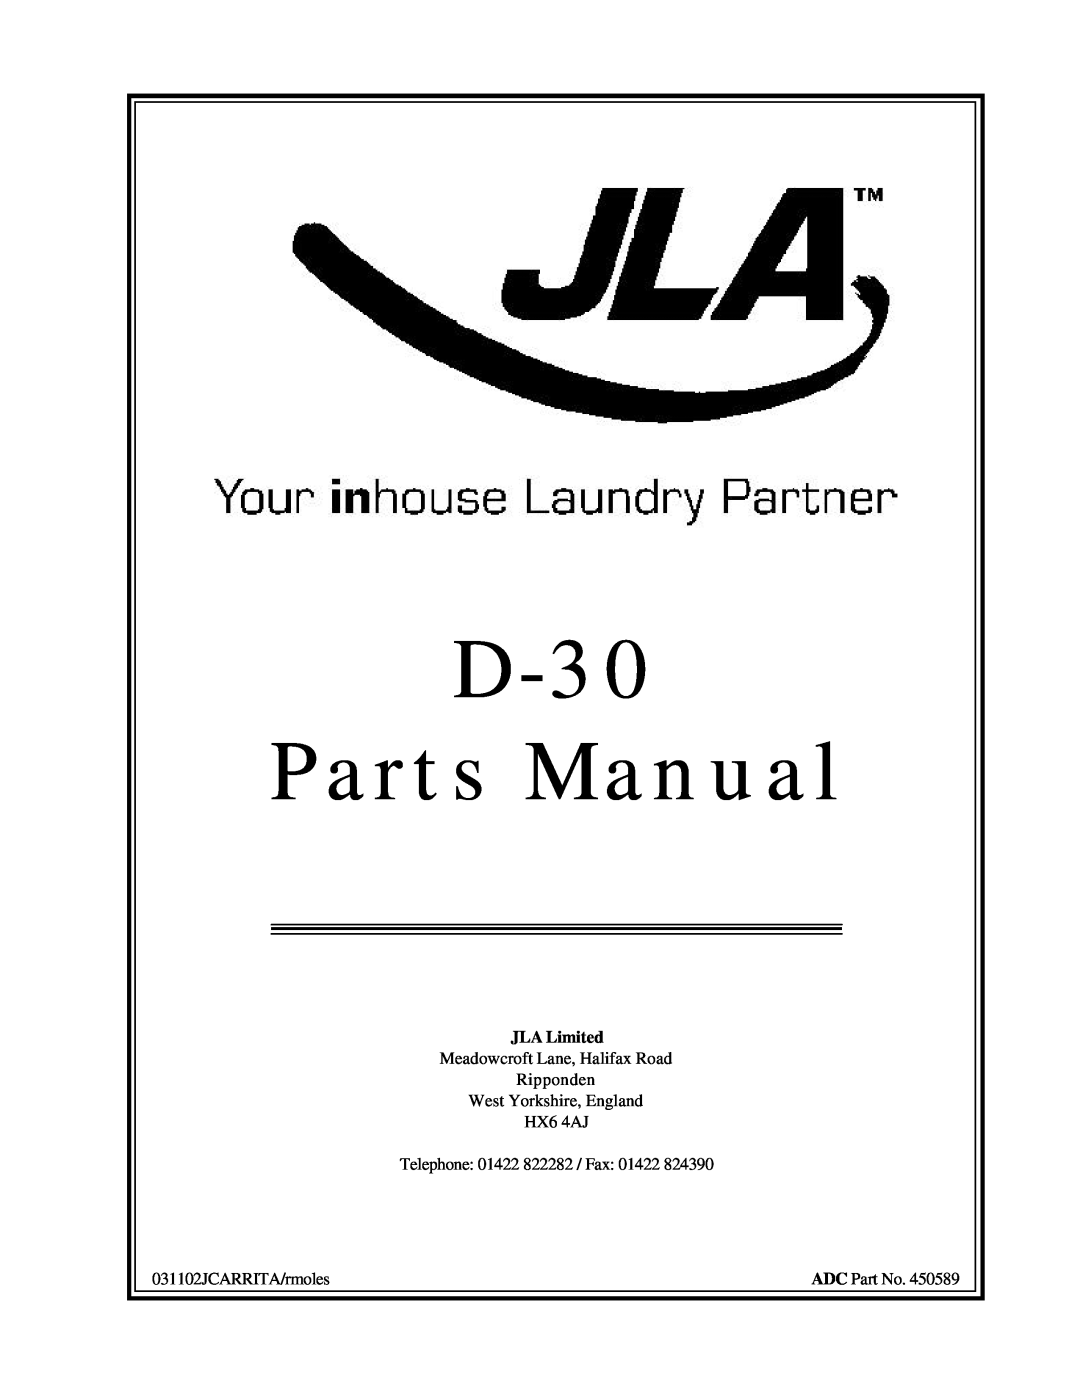 American Dryer Corp D30 manual D-30 Parts Manual, JLA Limited 